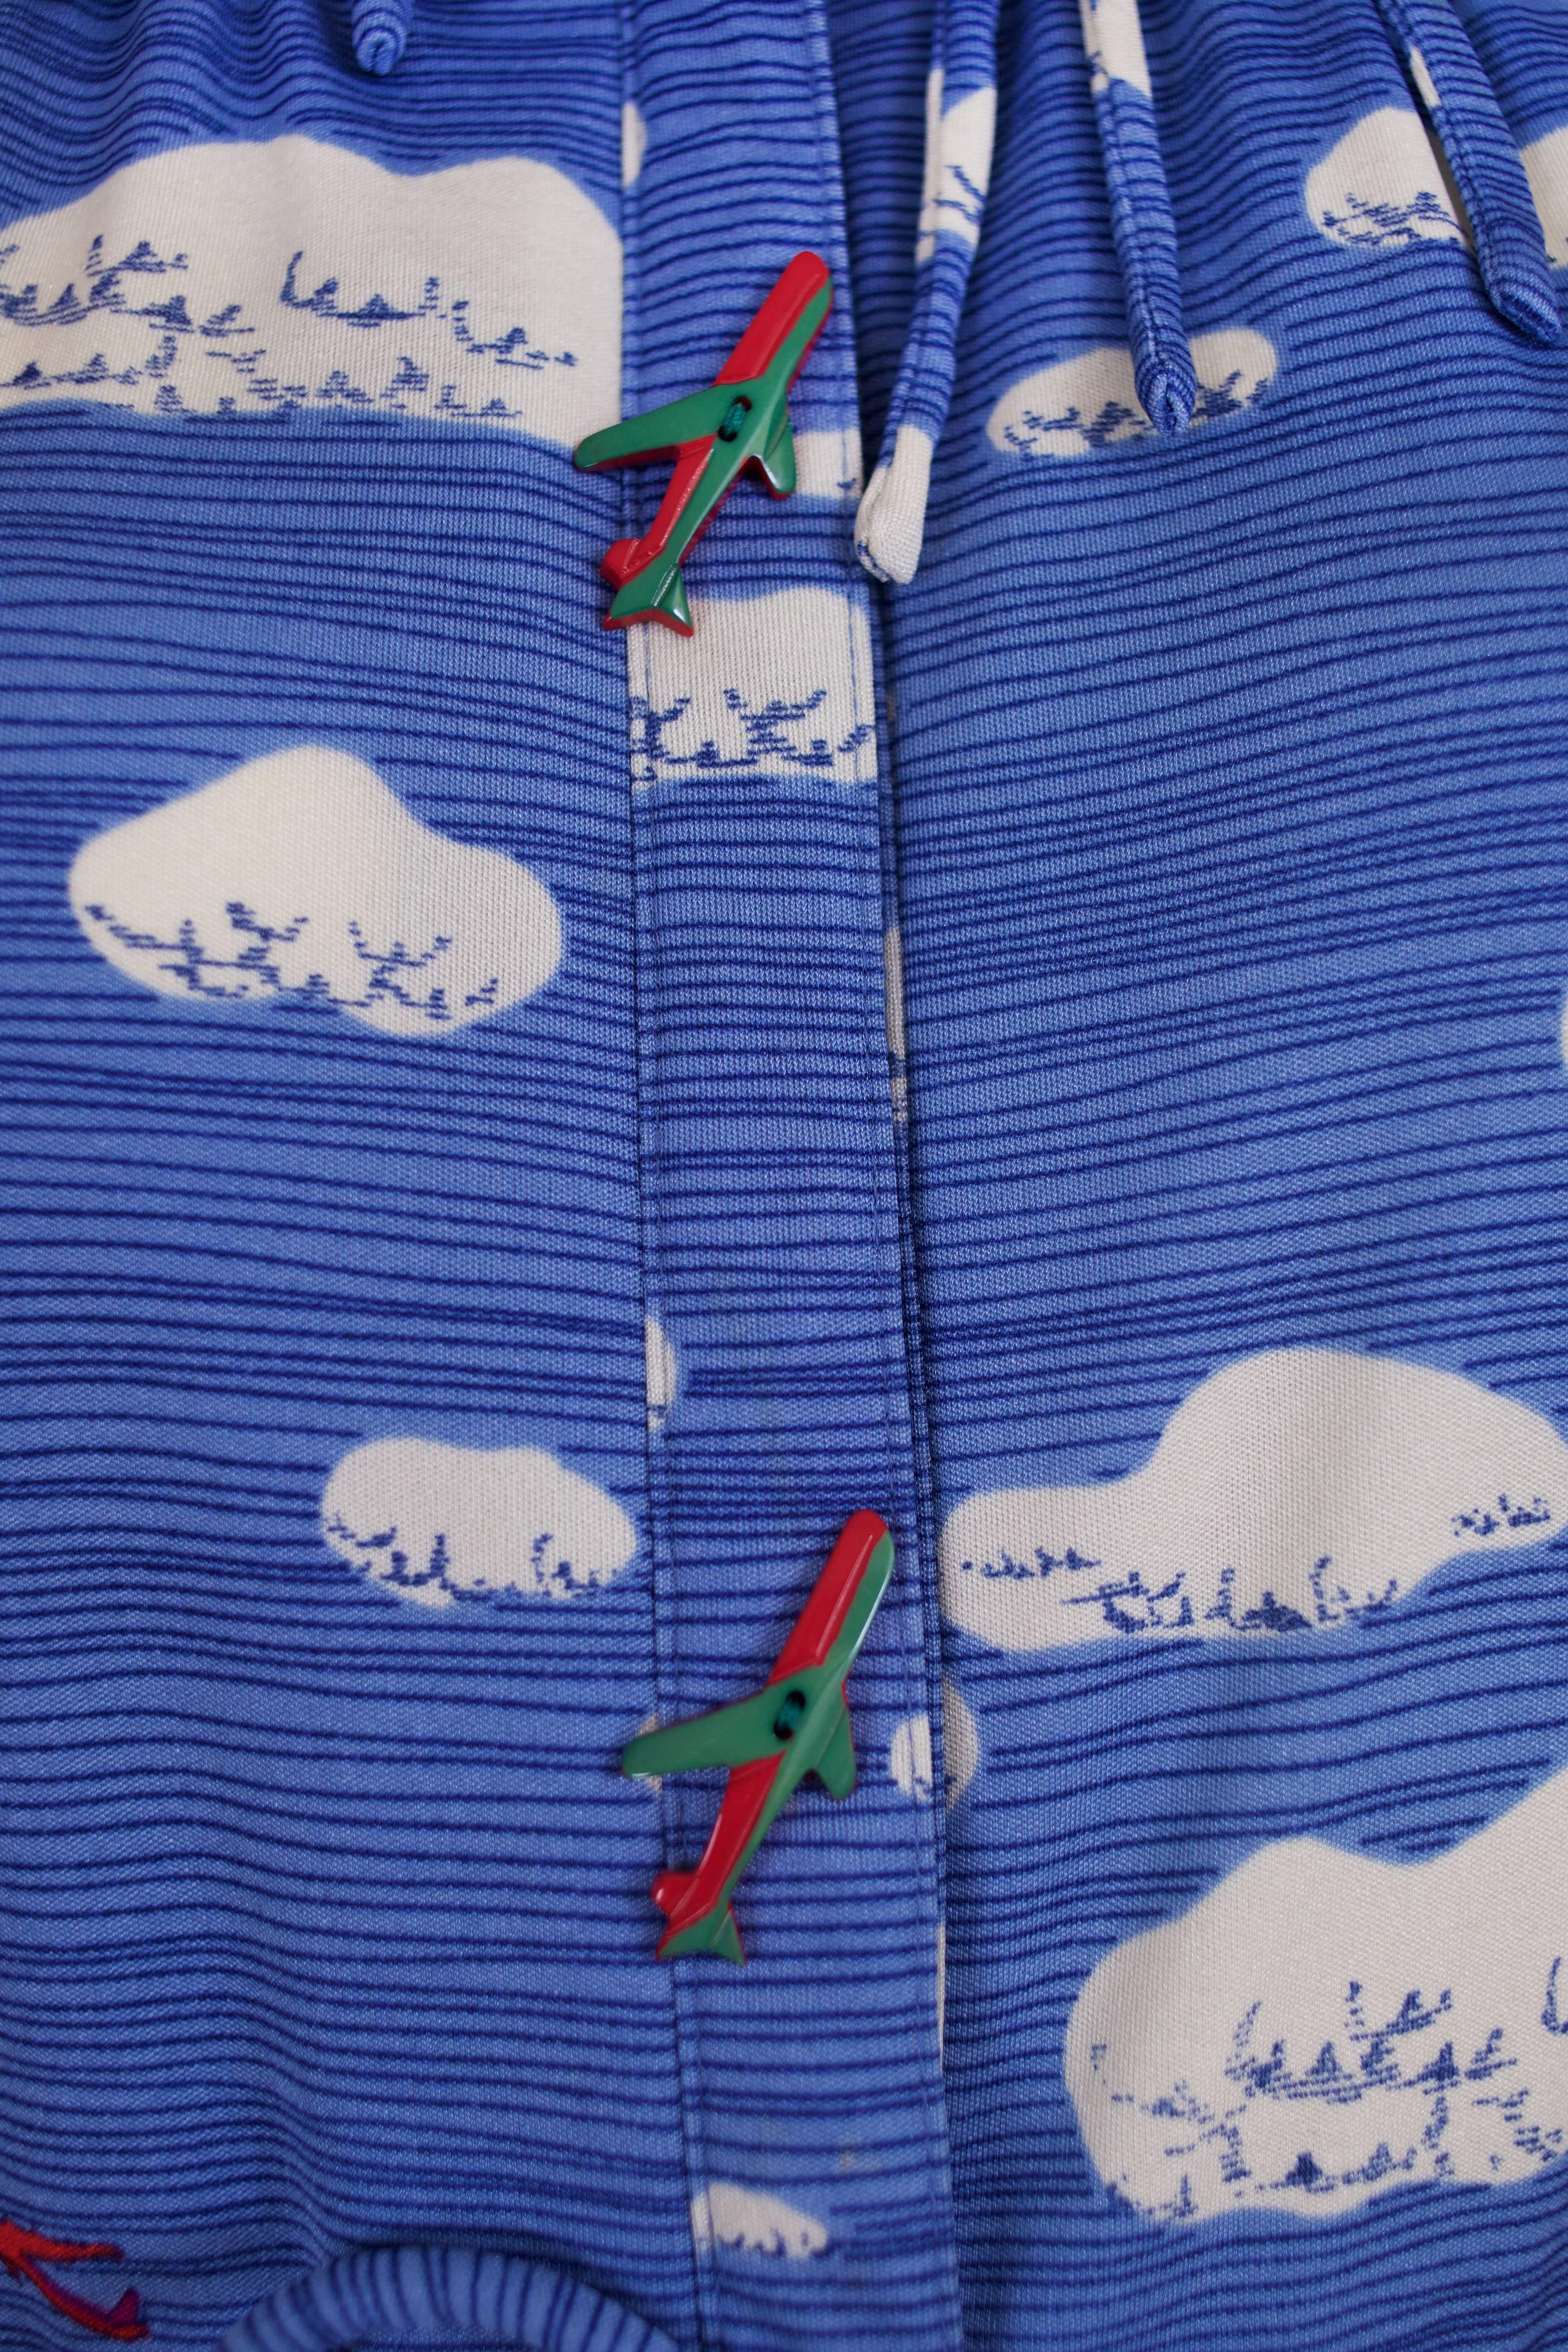 Women's Hanae Mori Cloud & Airplane Novelty Print Day Dress w/Bakelite Airplane Buttons